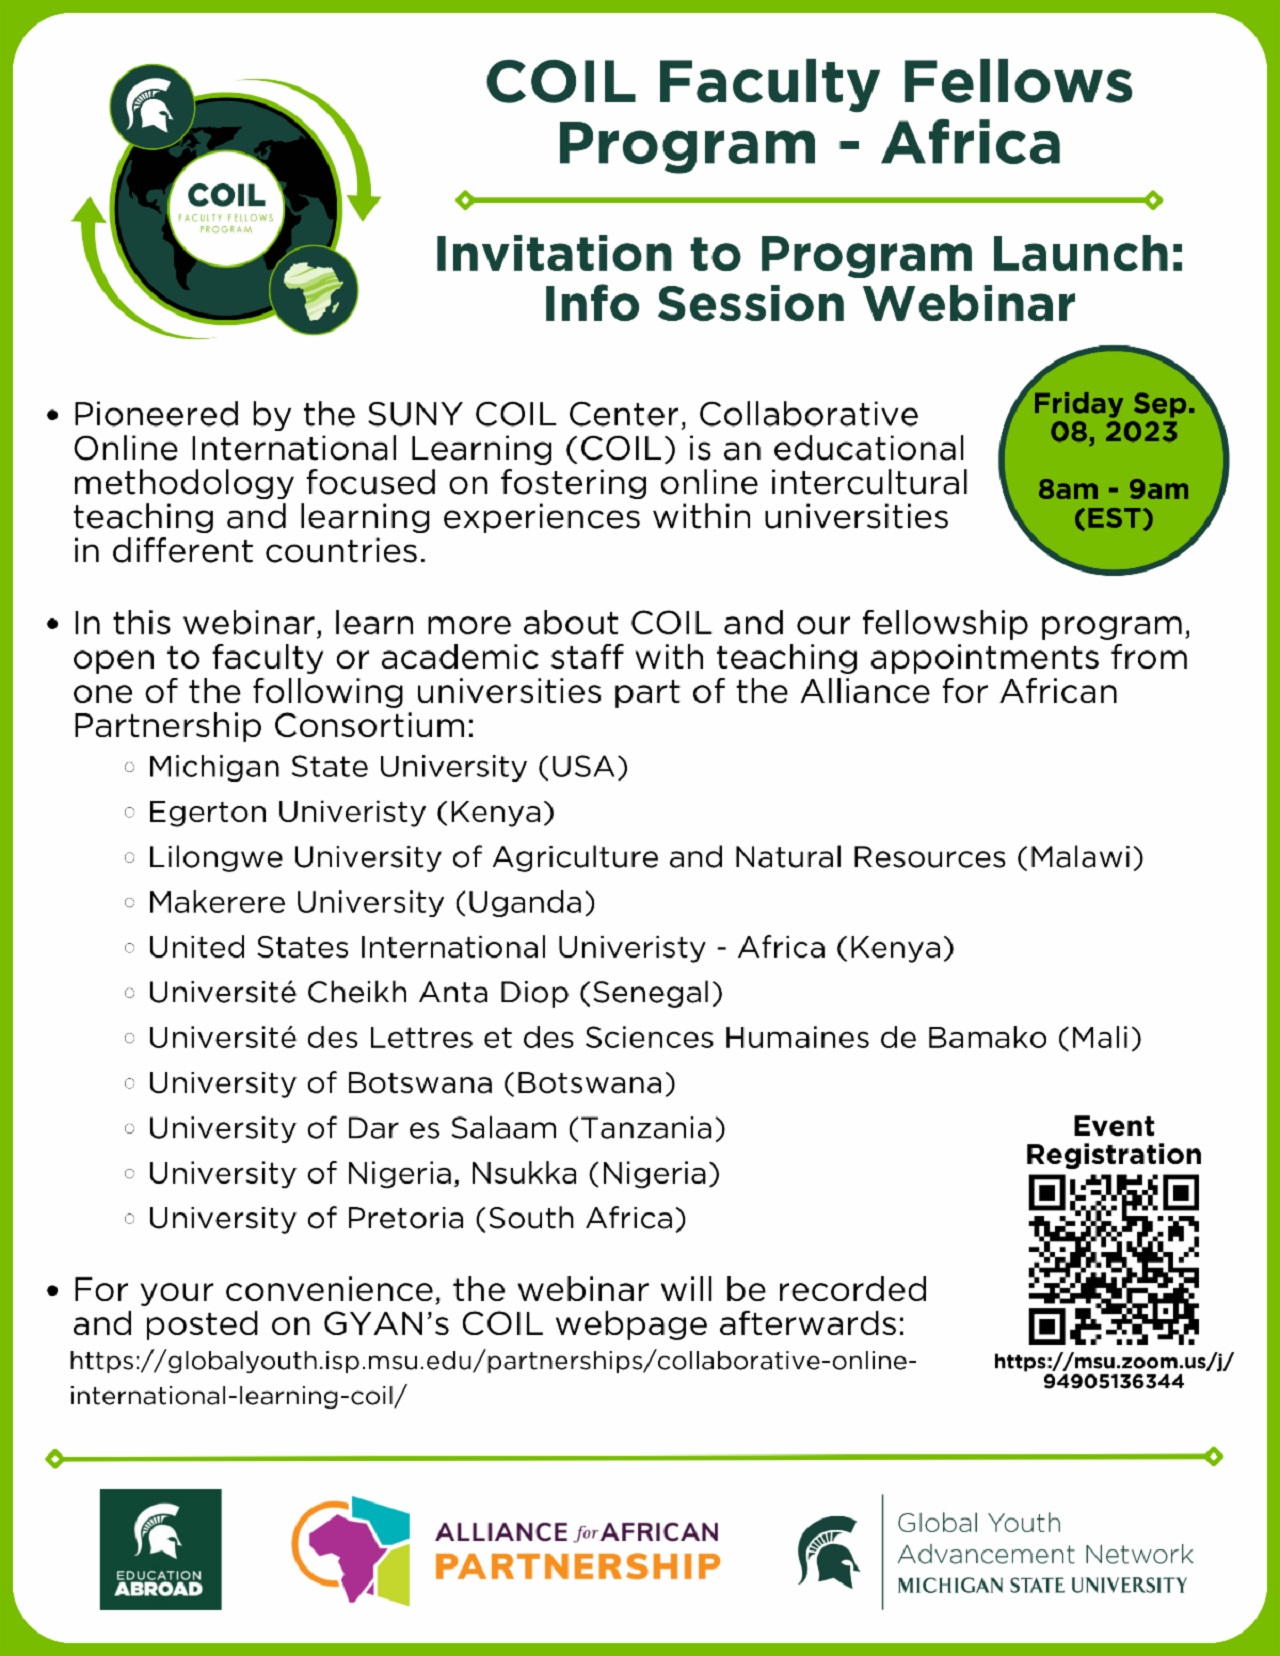  Coil Faculty Fellows Program - Africa